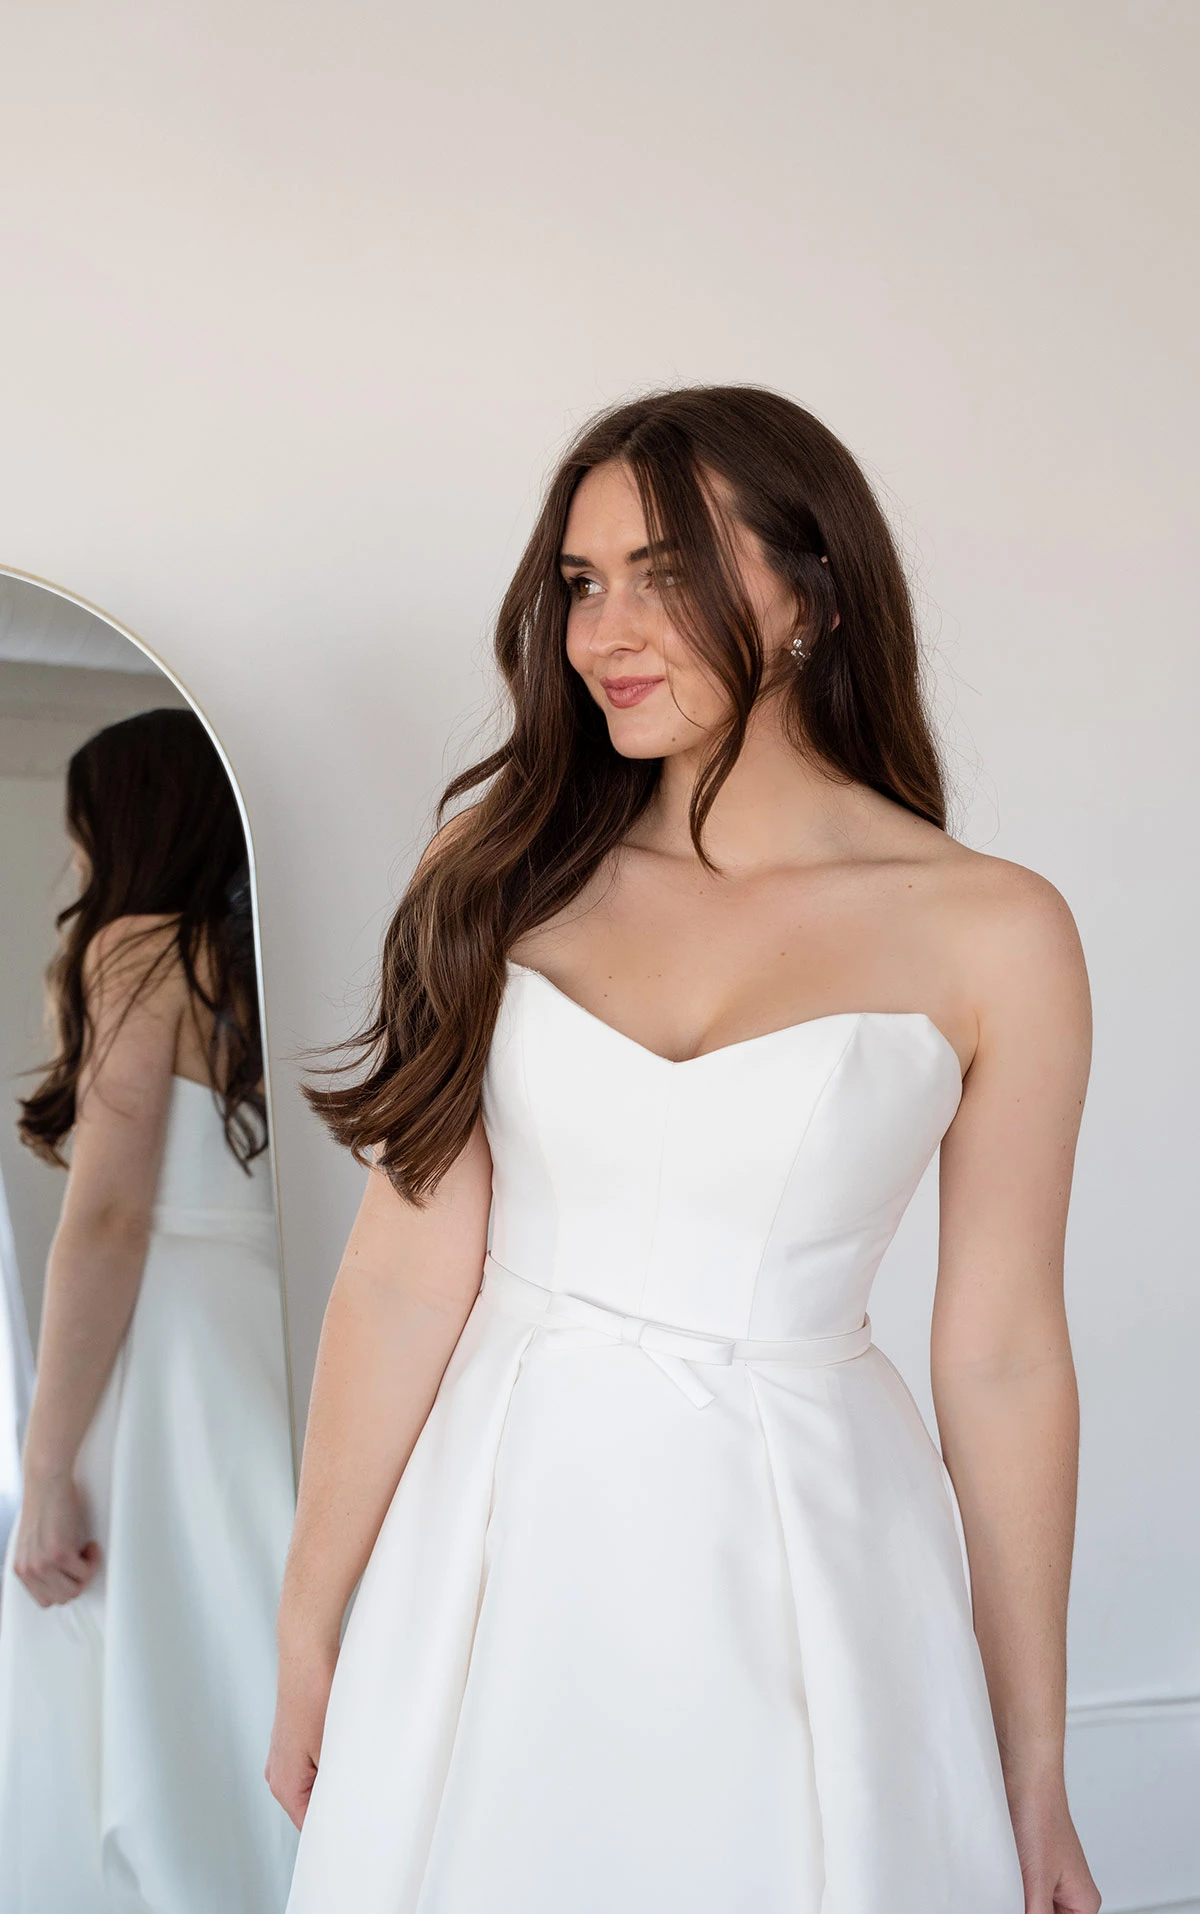 7601 Sleek A-Line Wedding Dress with Bow Detail  by Stella York